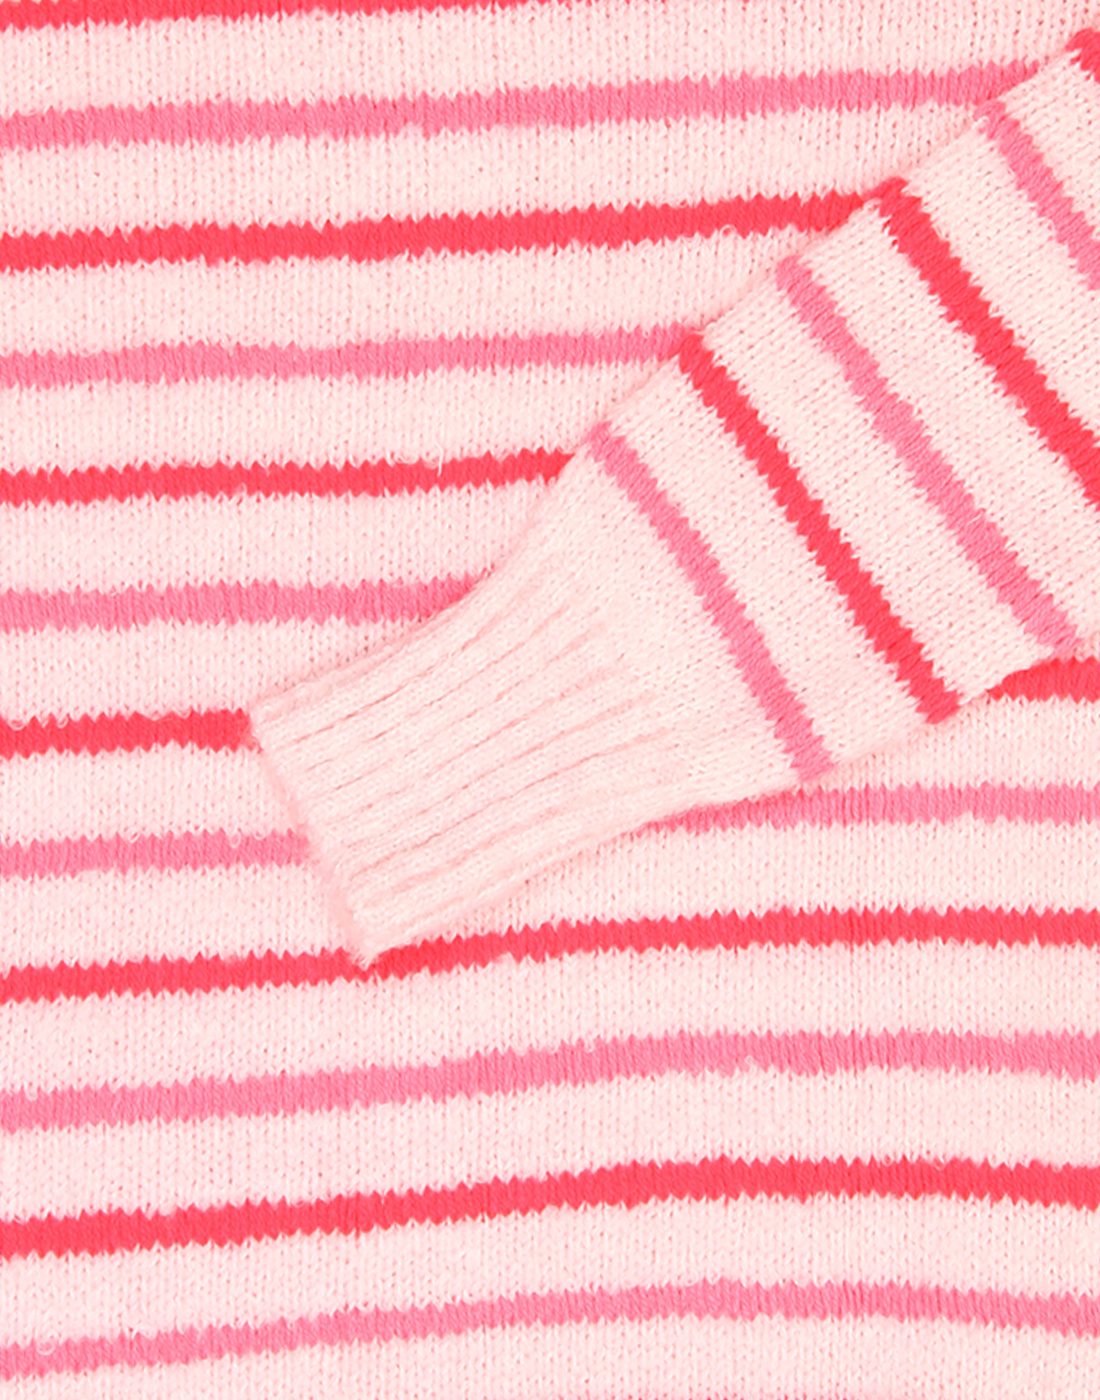 Wingsfield Girls Pink Embellished Sweater